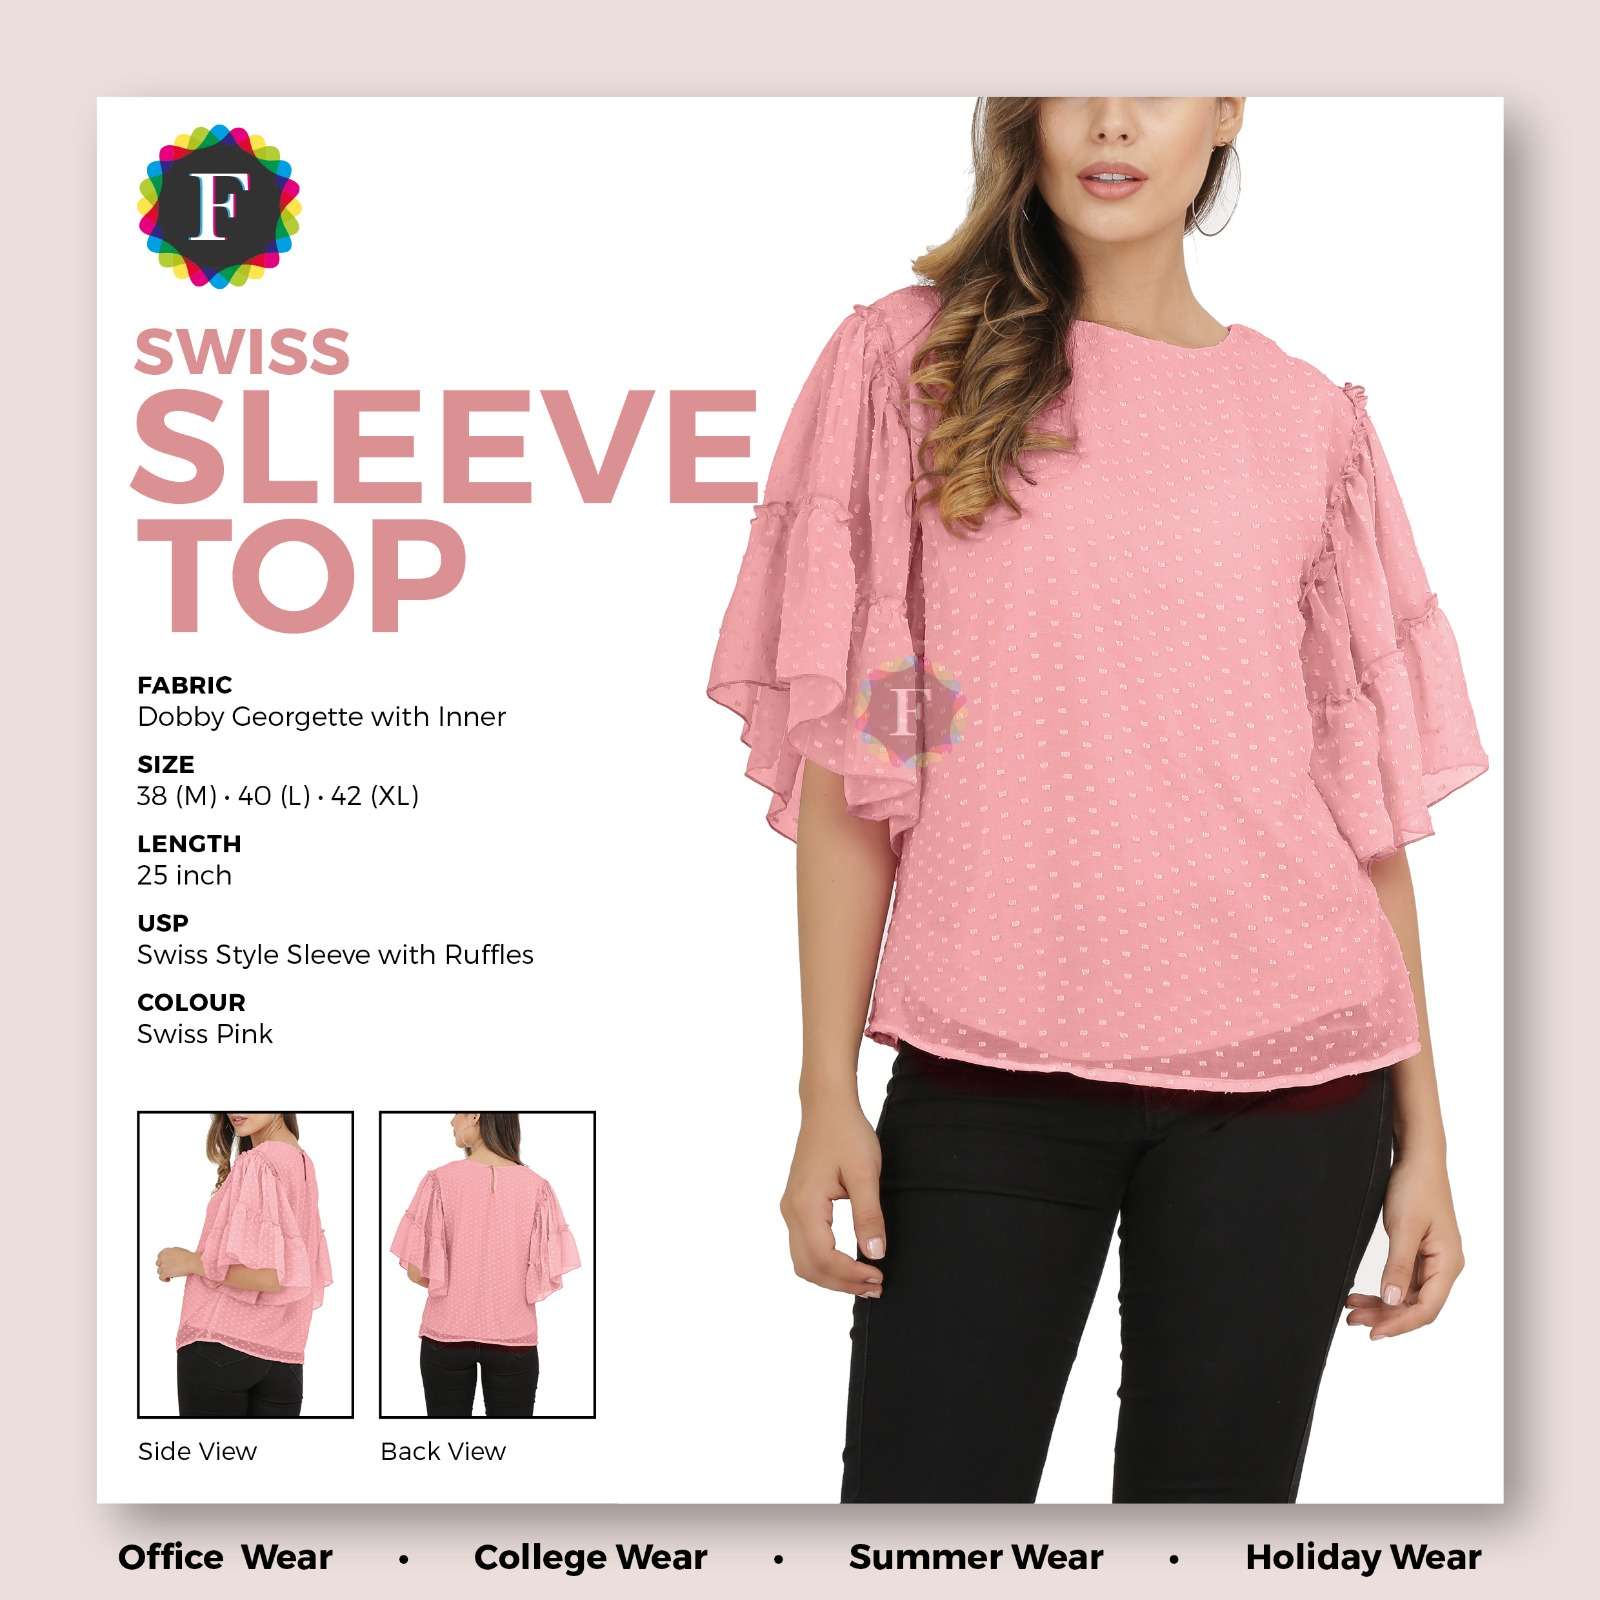 Swiss Sleeve Top Western Girls Tops Collection Buy Online